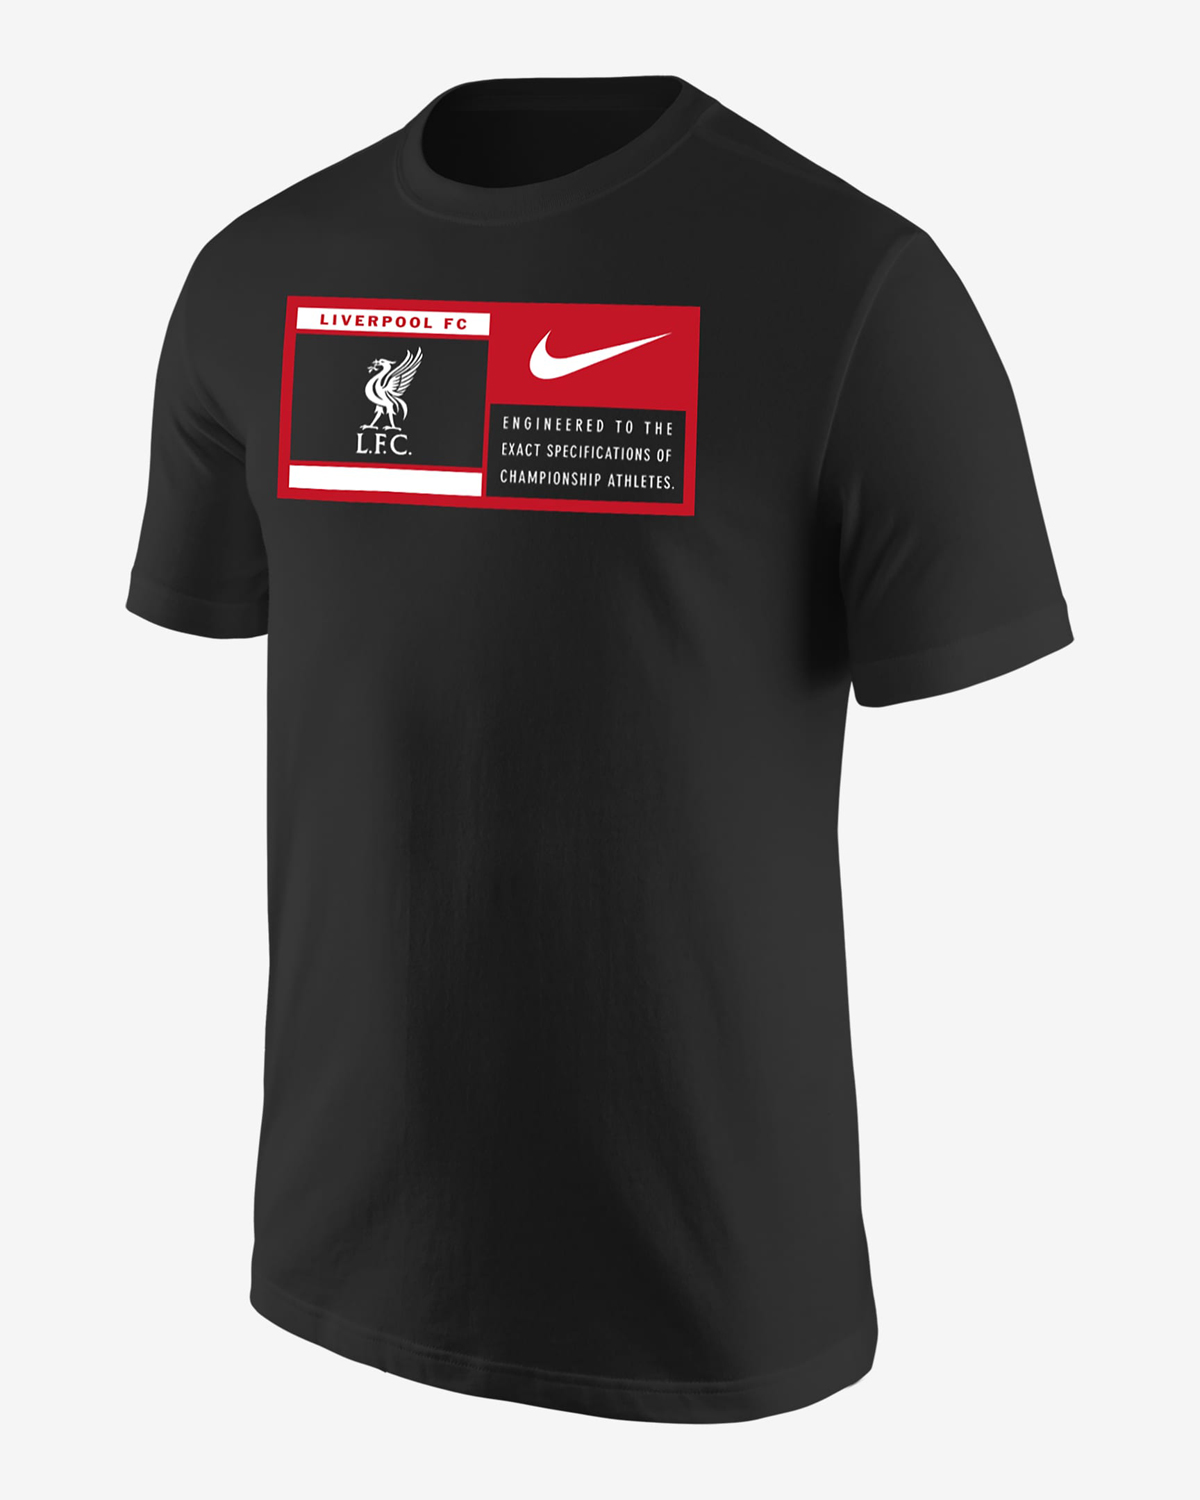 Nike-LeBron-20-Liverpool-FC-Shirt